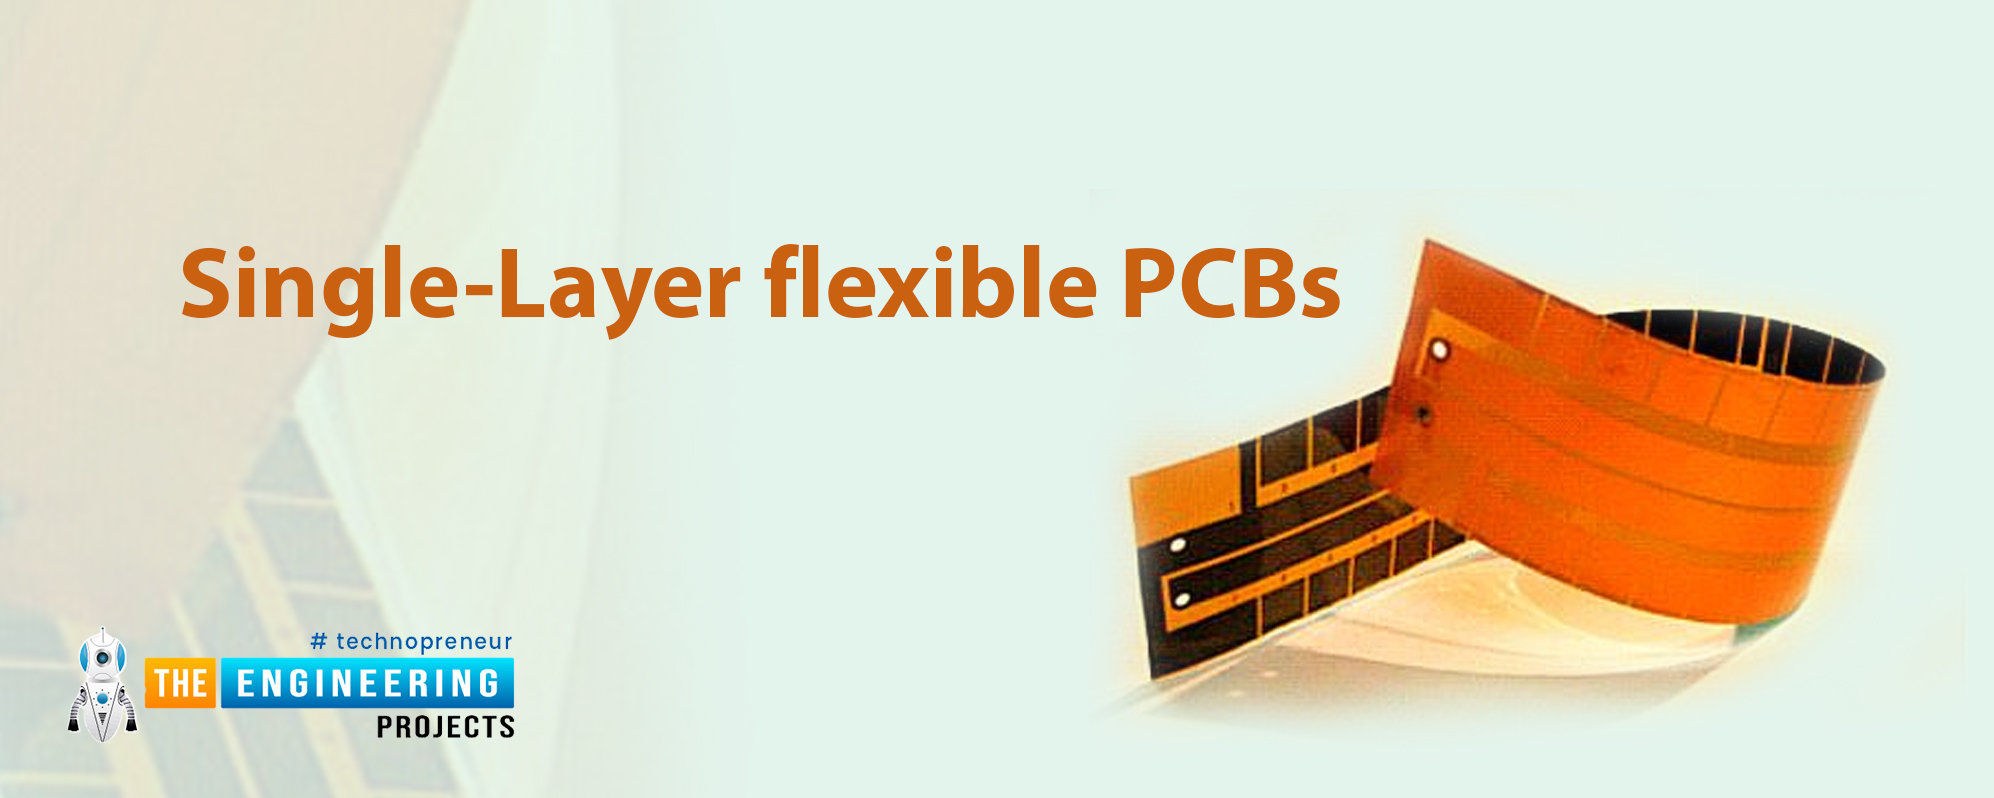 Single-layer PCB, Single-layer Definition, Construction of single layer, Types of singles layer PCB, Single-layer flexible PCBs